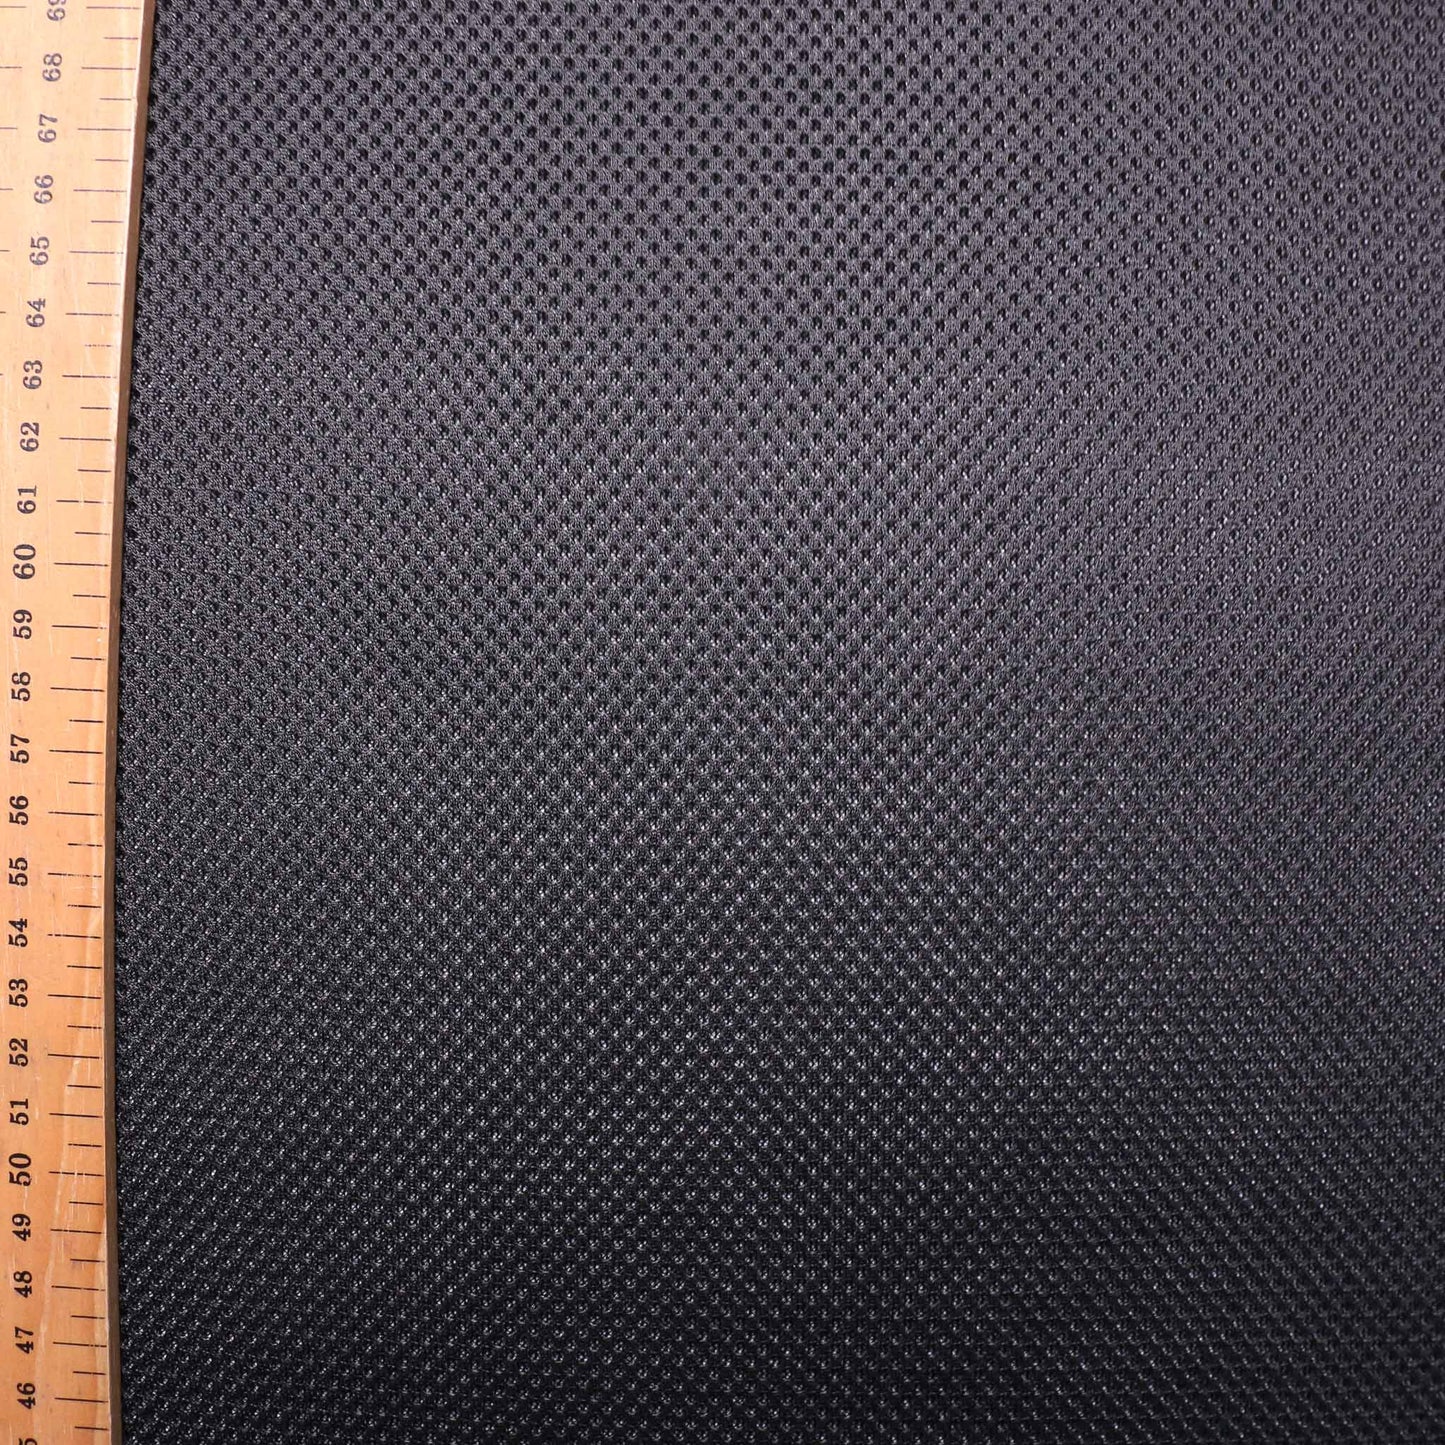 metre sports fabric in black airtex mesh spacer fabric